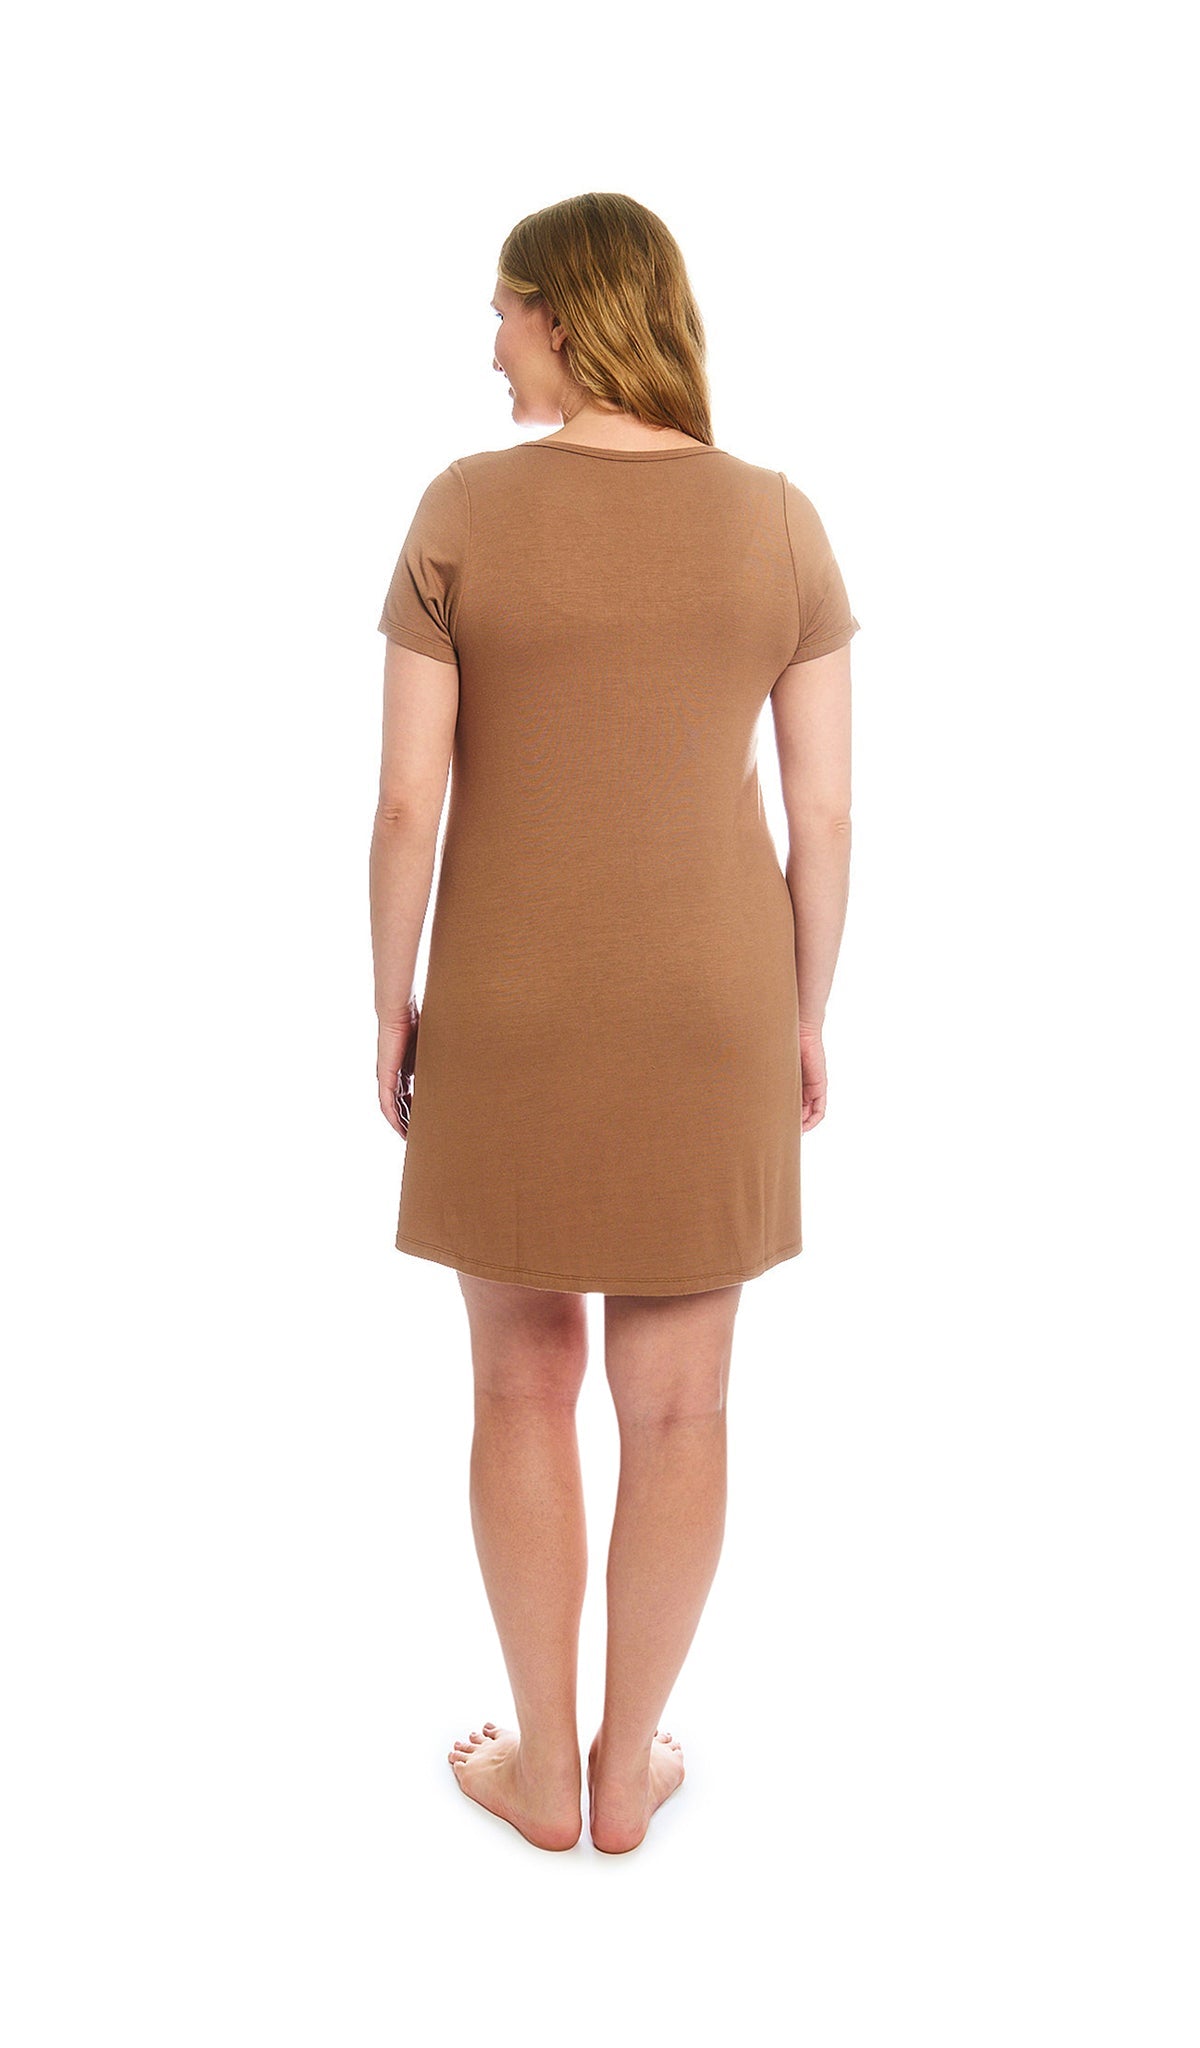 Mocha Stripe Carolyn 2-Piece Set, back shot of woman wearing short sleeve nightgown.